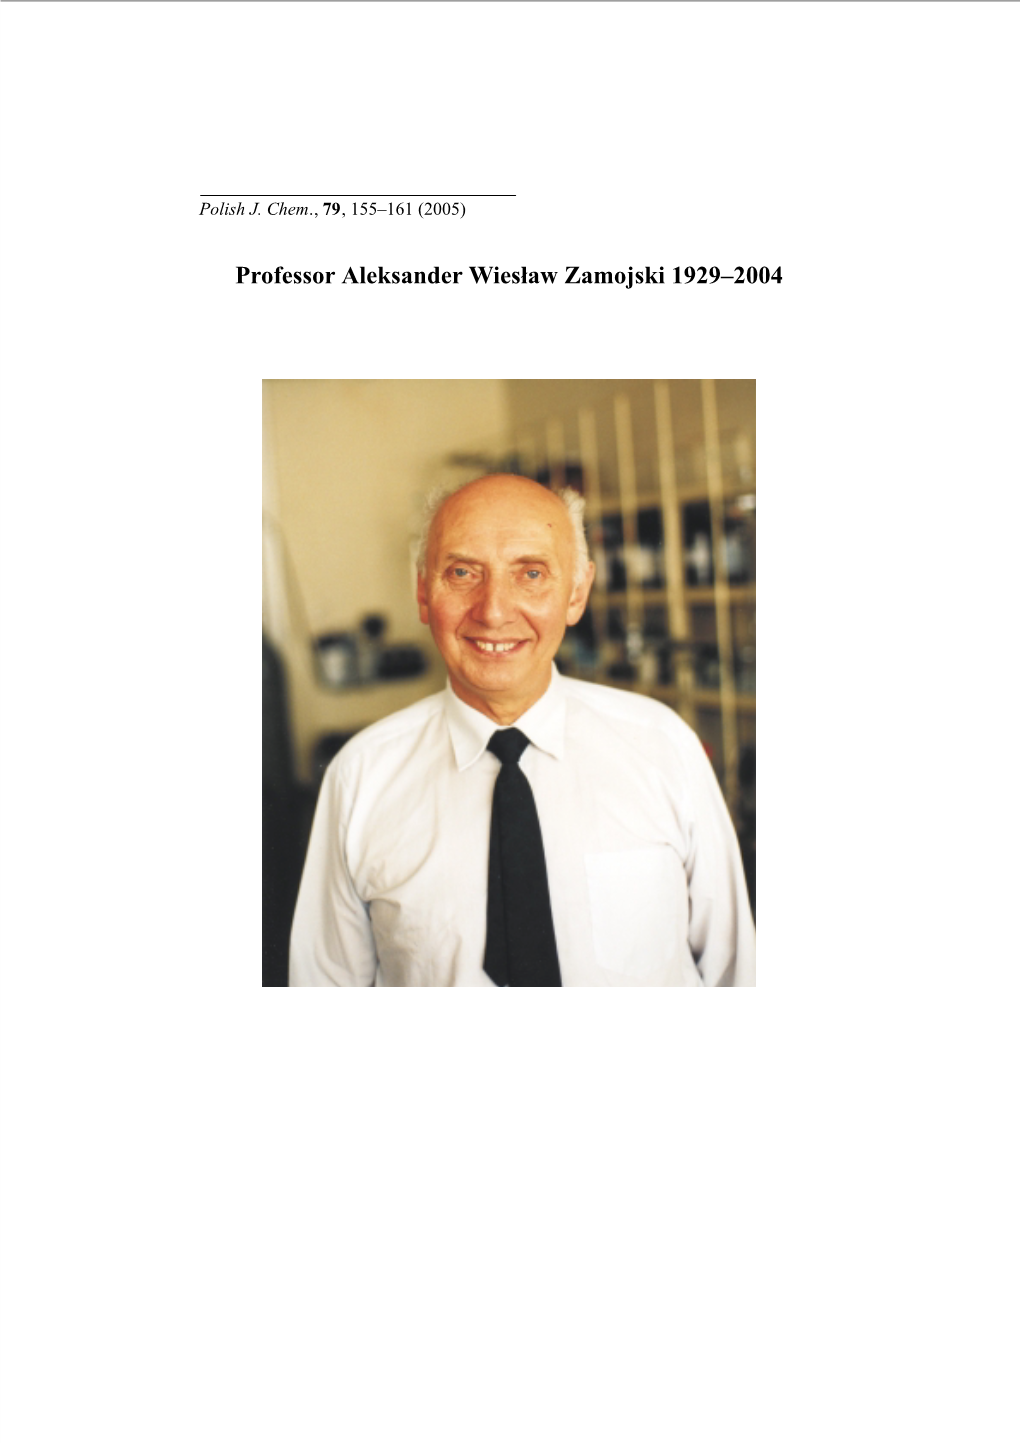 Professor Aleksander Wies³aw Zamojski 1929–2004 OBITUARY*